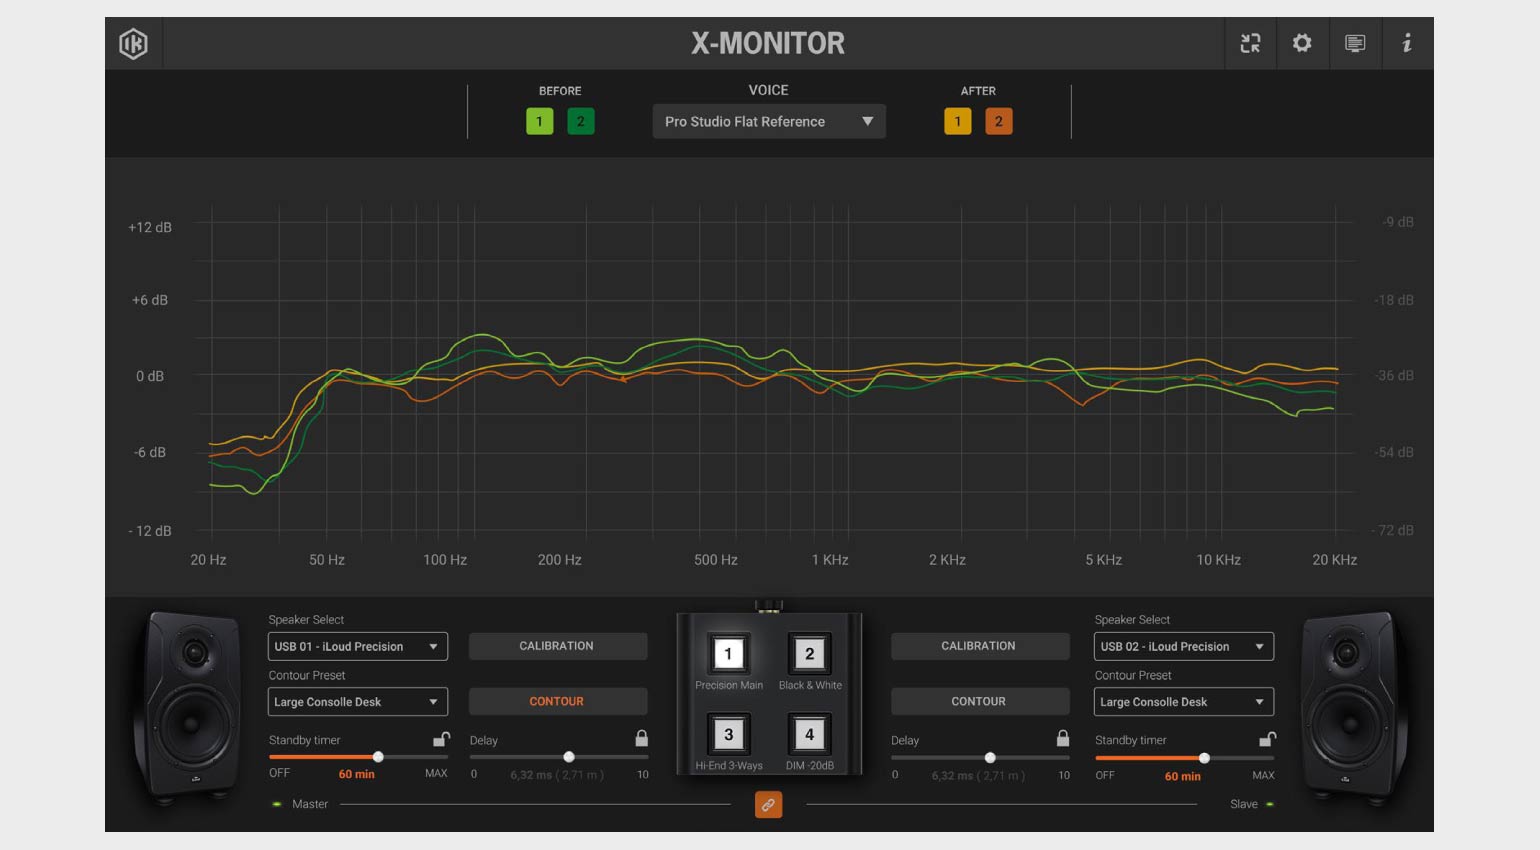 IK Multimedia's X-MONITOR software